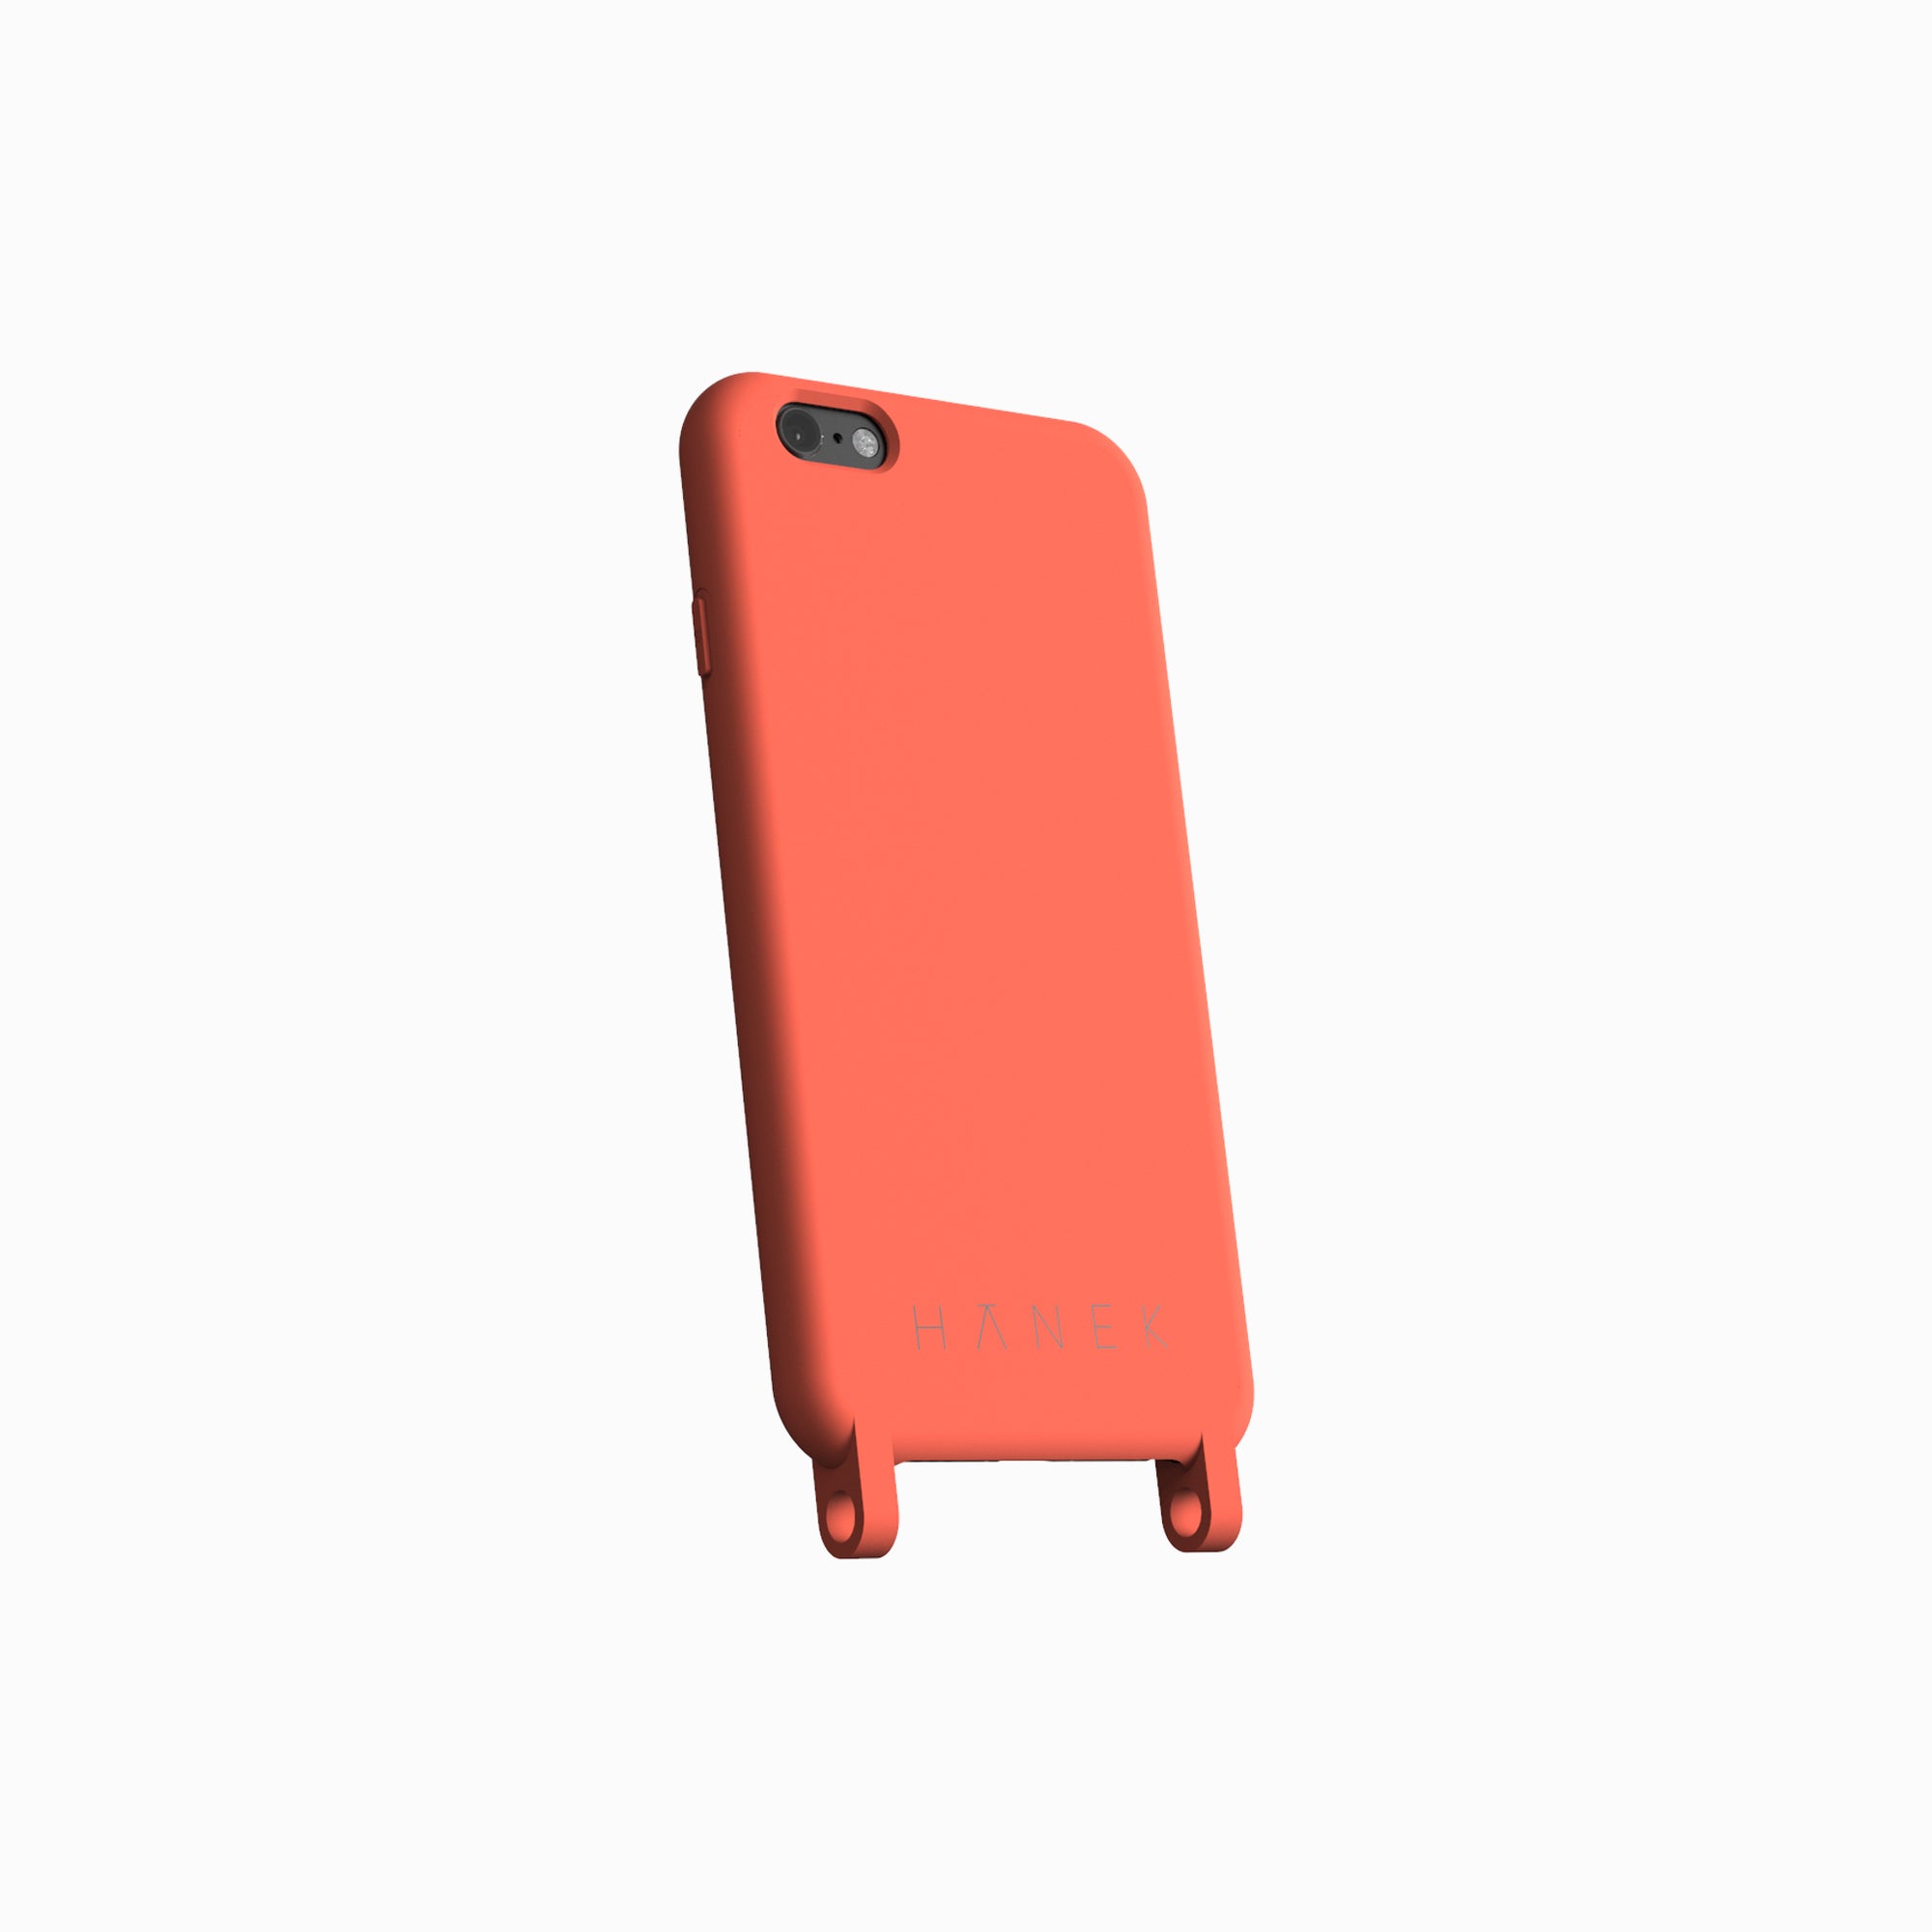 Funda para iphone 12 mini color lila marca Soke – Segunda que Barato